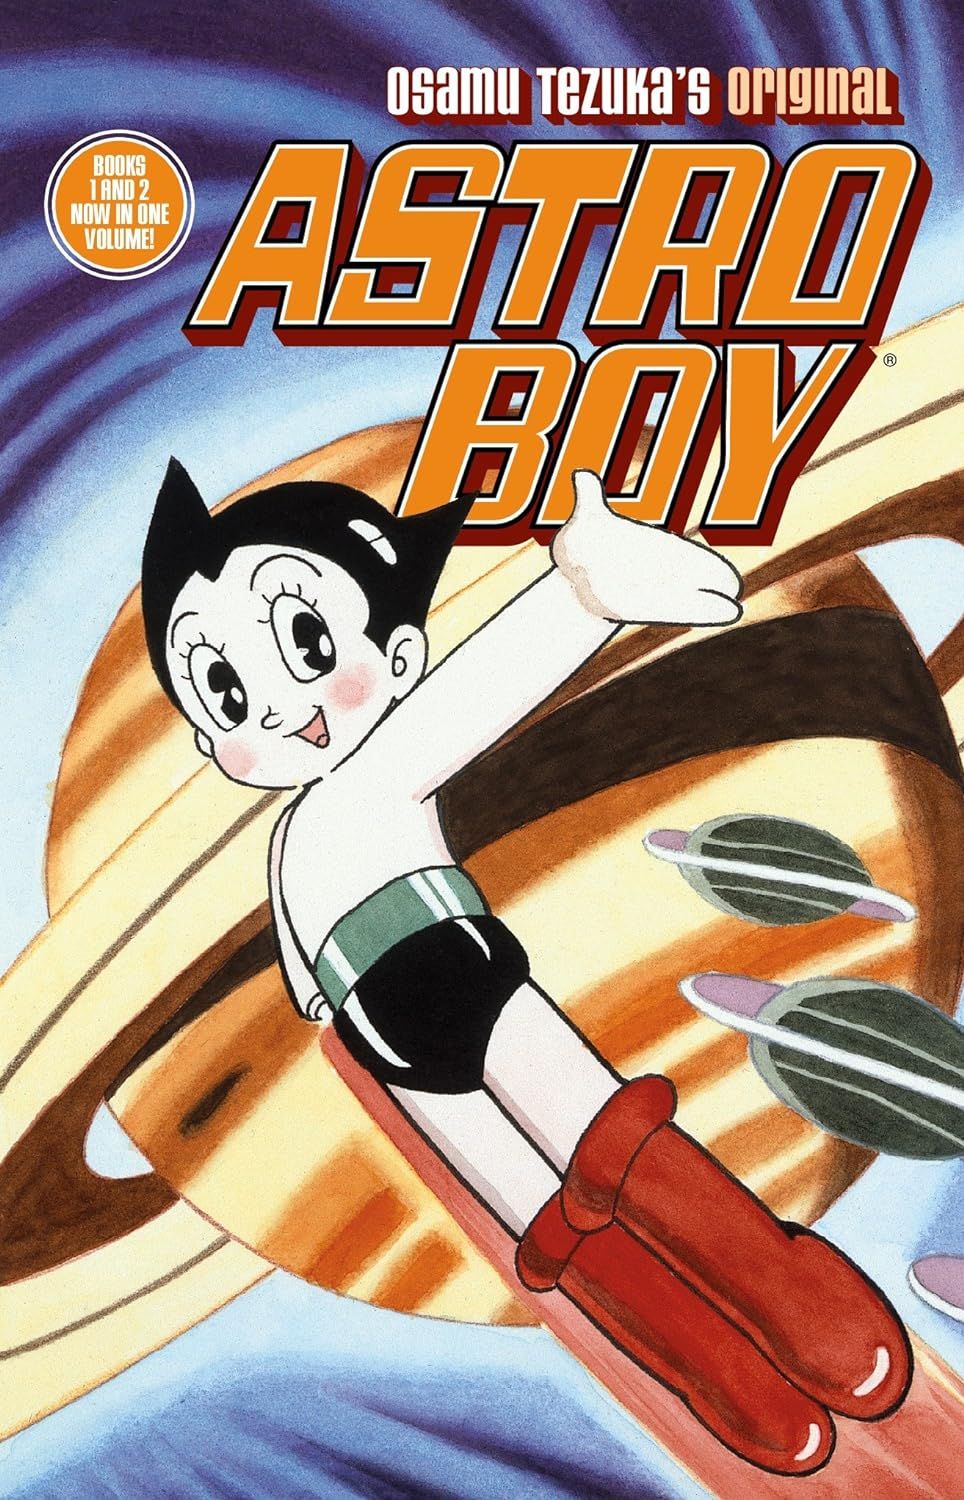 Astro Boy by Osamu Tezuka cover